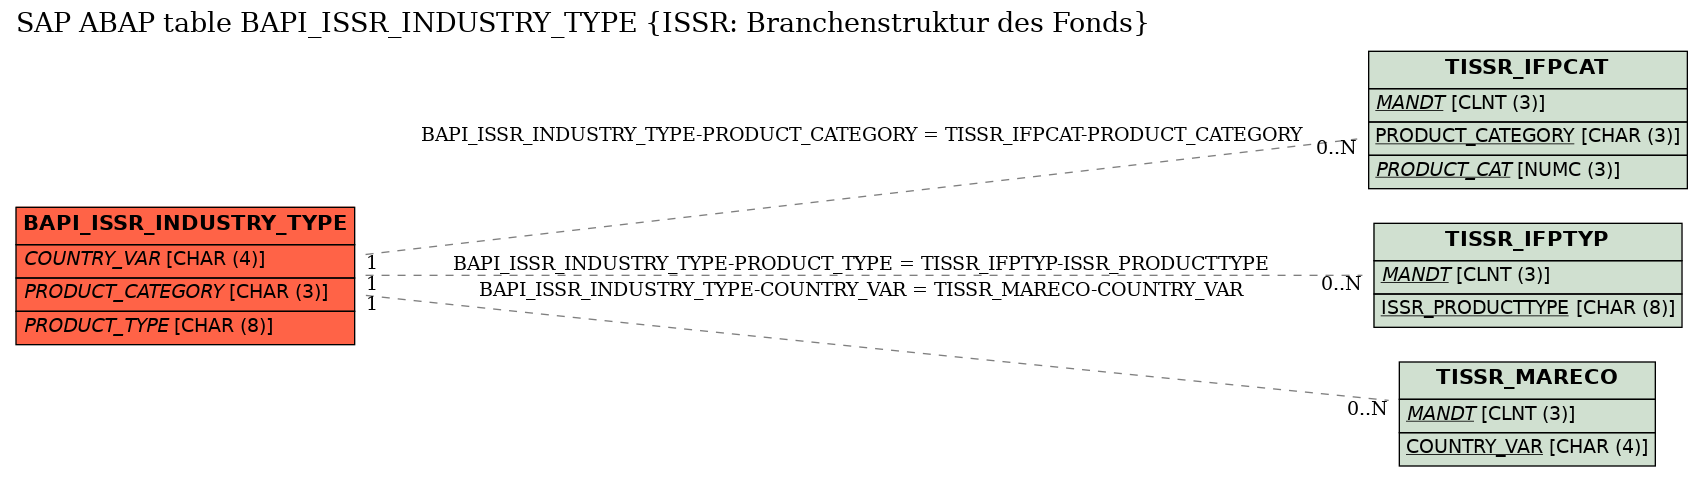 E-R Diagram for table BAPI_ISSR_INDUSTRY_TYPE (ISSR: Branchenstruktur des Fonds)